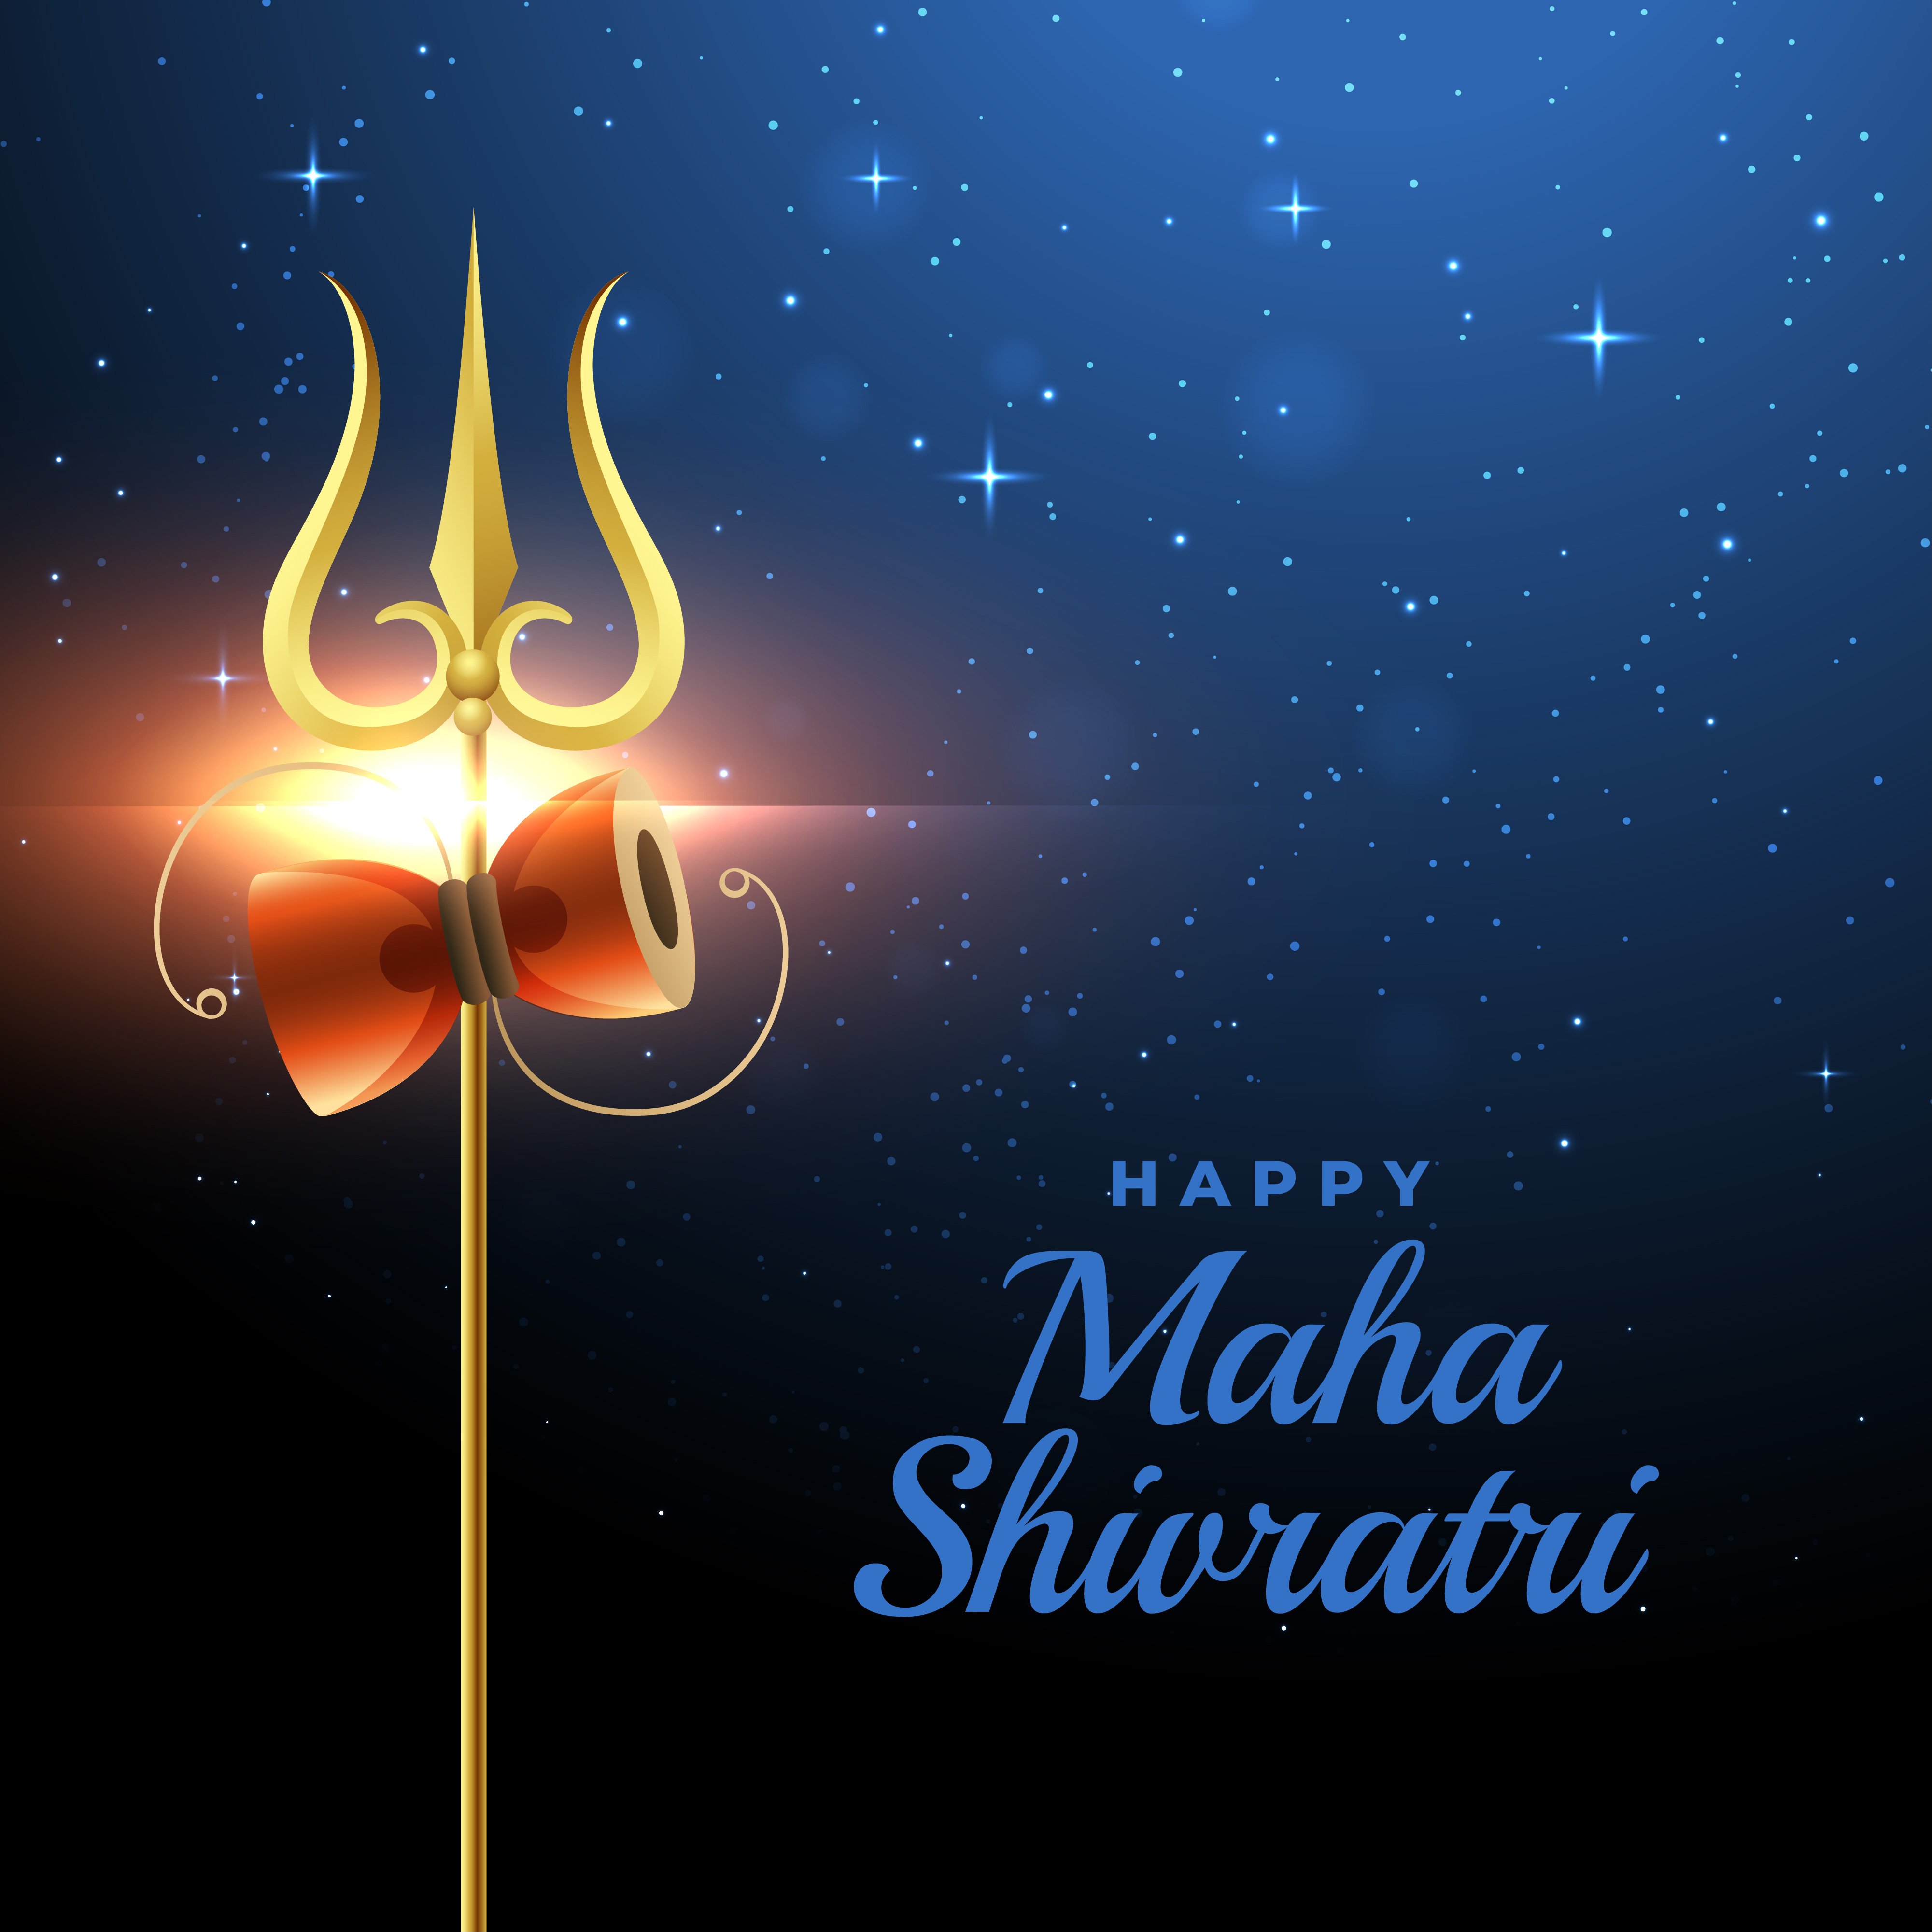 happy maha shivratri festival greeting Download Free Vector Art